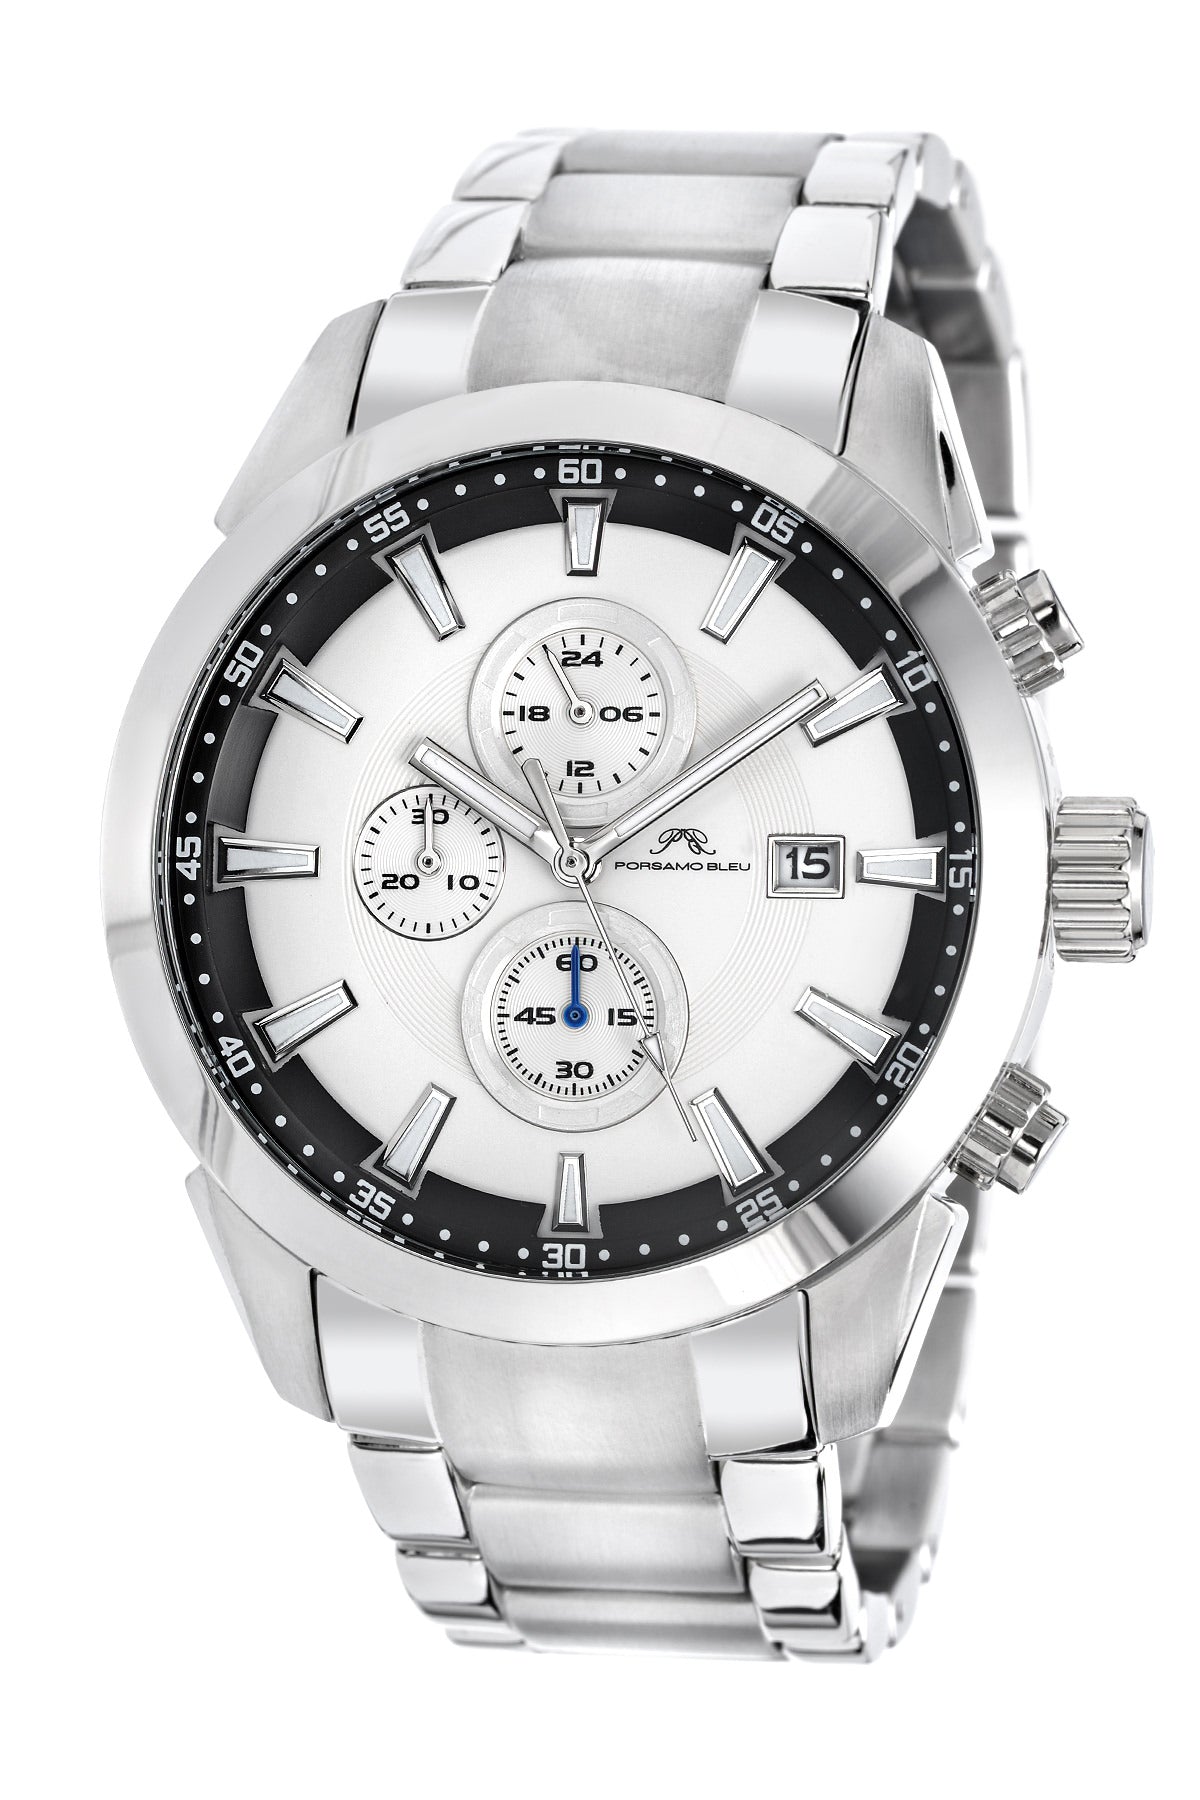 Porsamo Bleu Enzo Luxury Chronograph Men's Stainless Steel Watch, Silver 451AENS